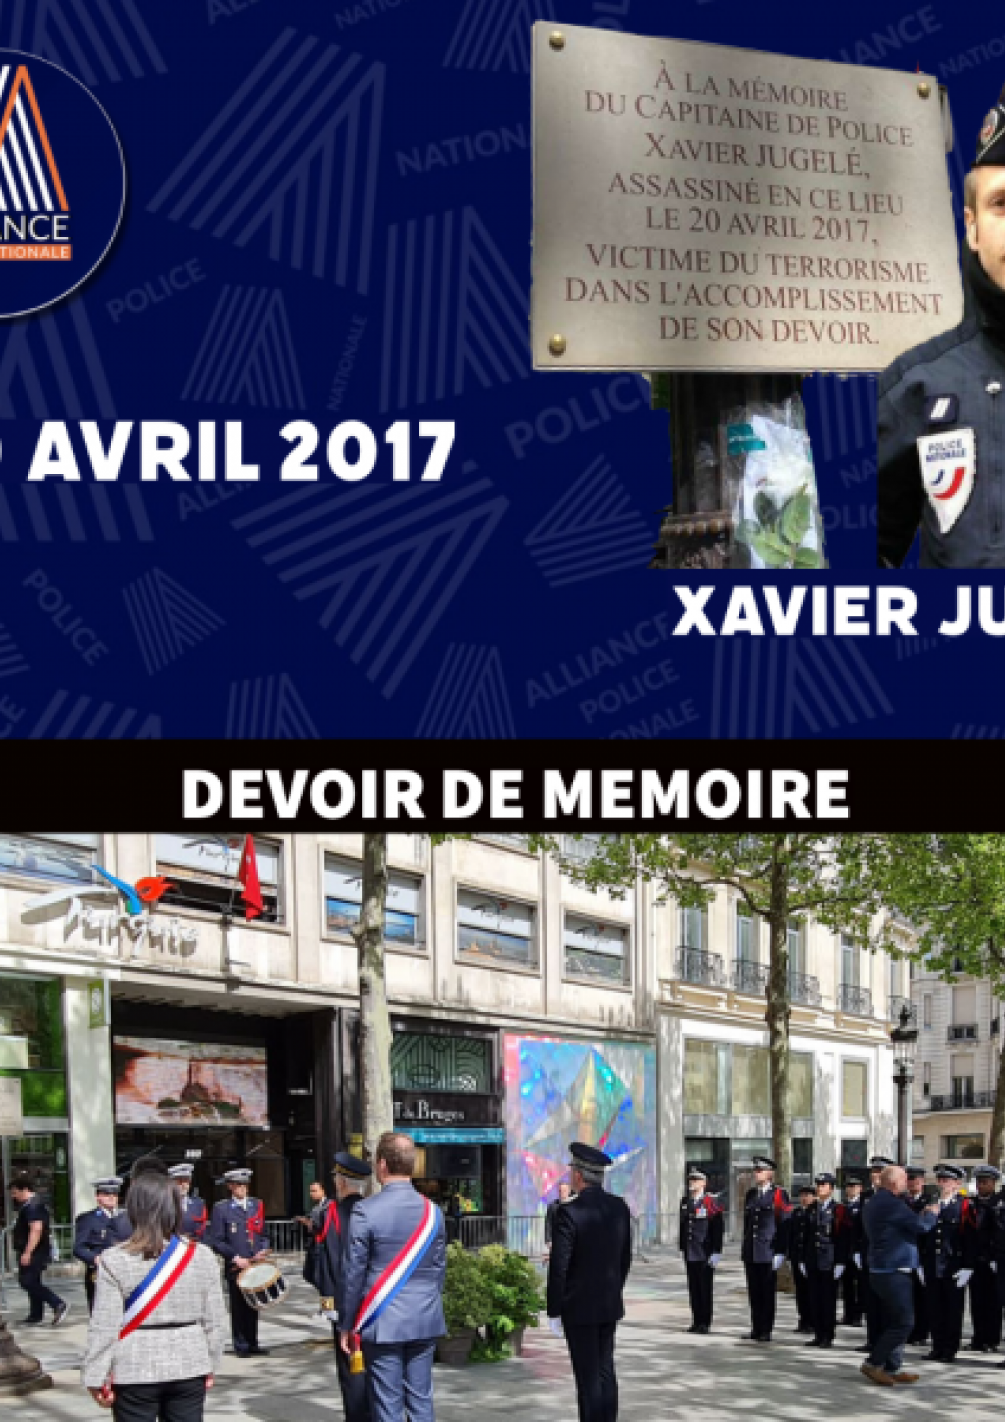 XAVIER JUGELE  - 20 avril 2017 - DEVOIR DE MEMOIRE